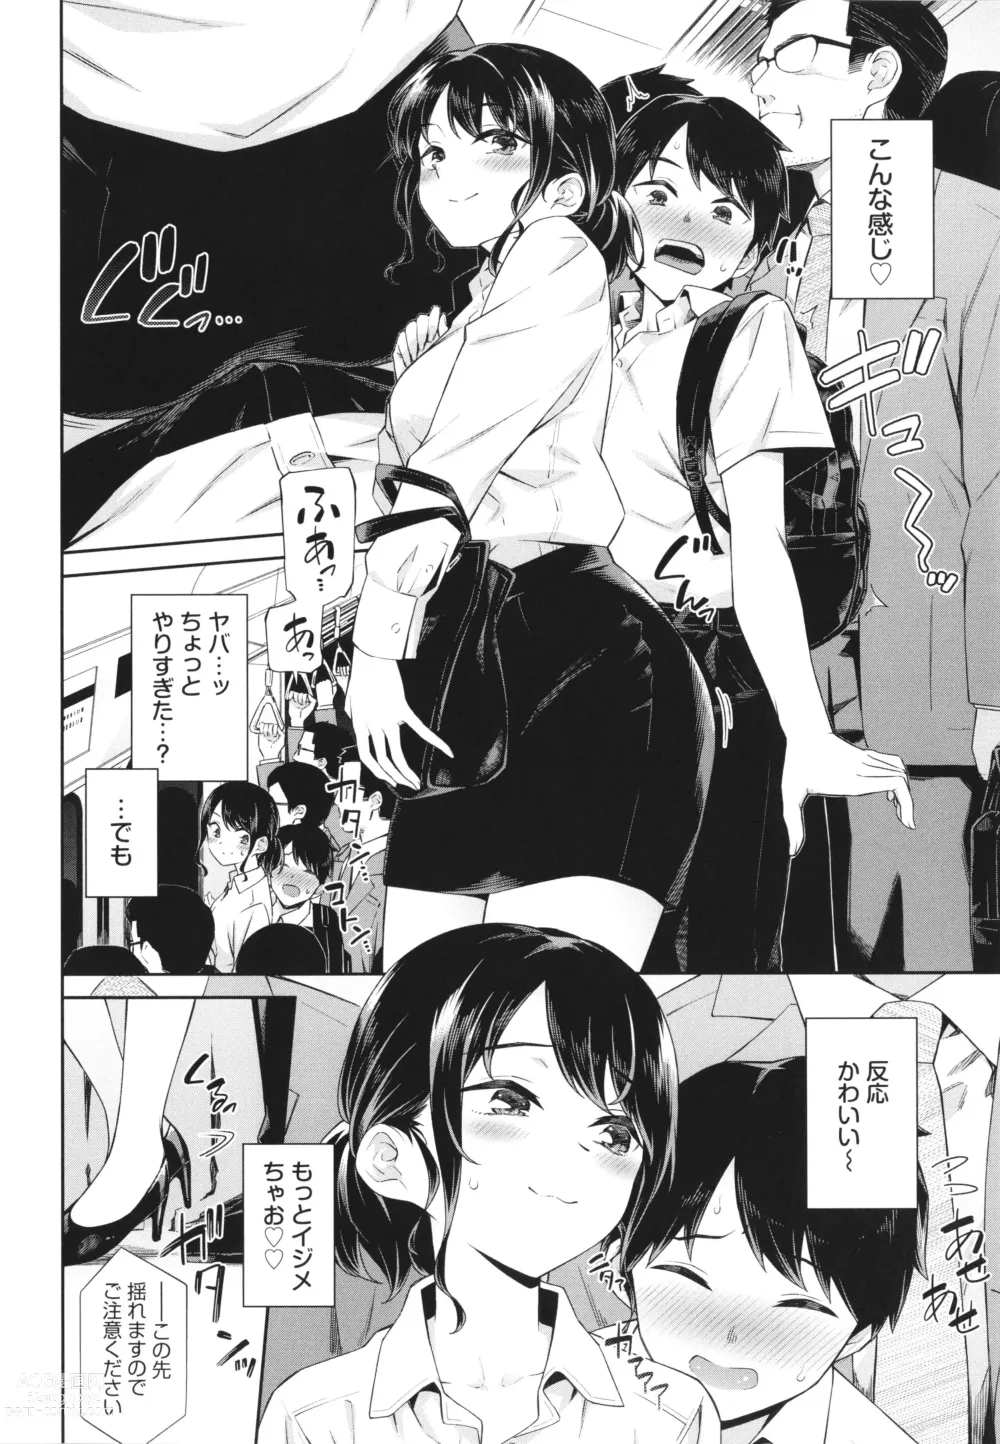 Page 7 of manga Go Kainin - Pregnancy